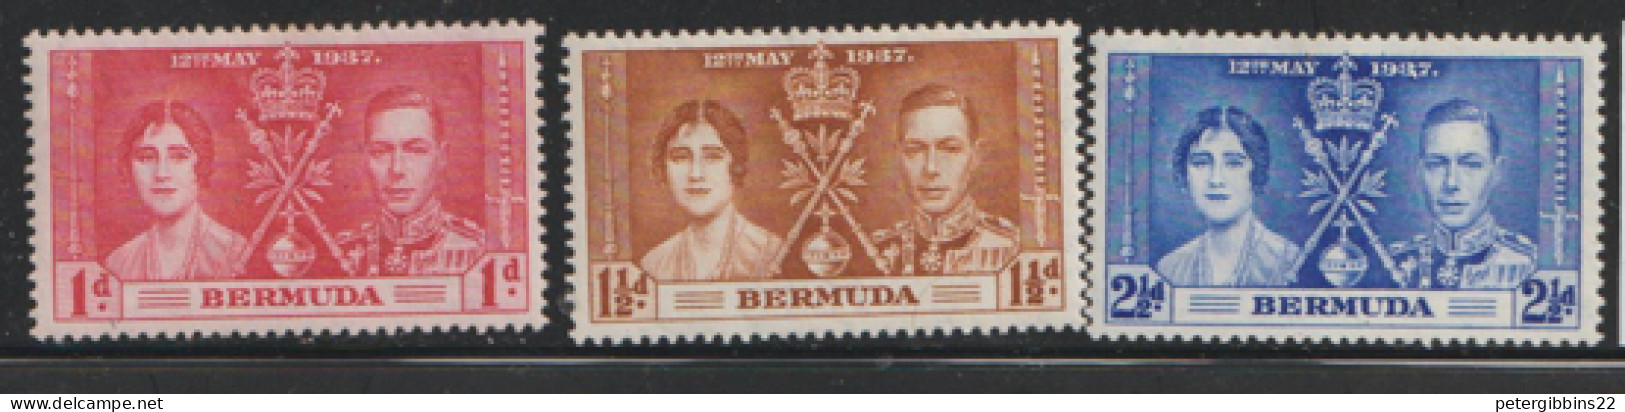 Bermuda   1937  SG   107-9  Coronation   Mounted Mint - Bermuda